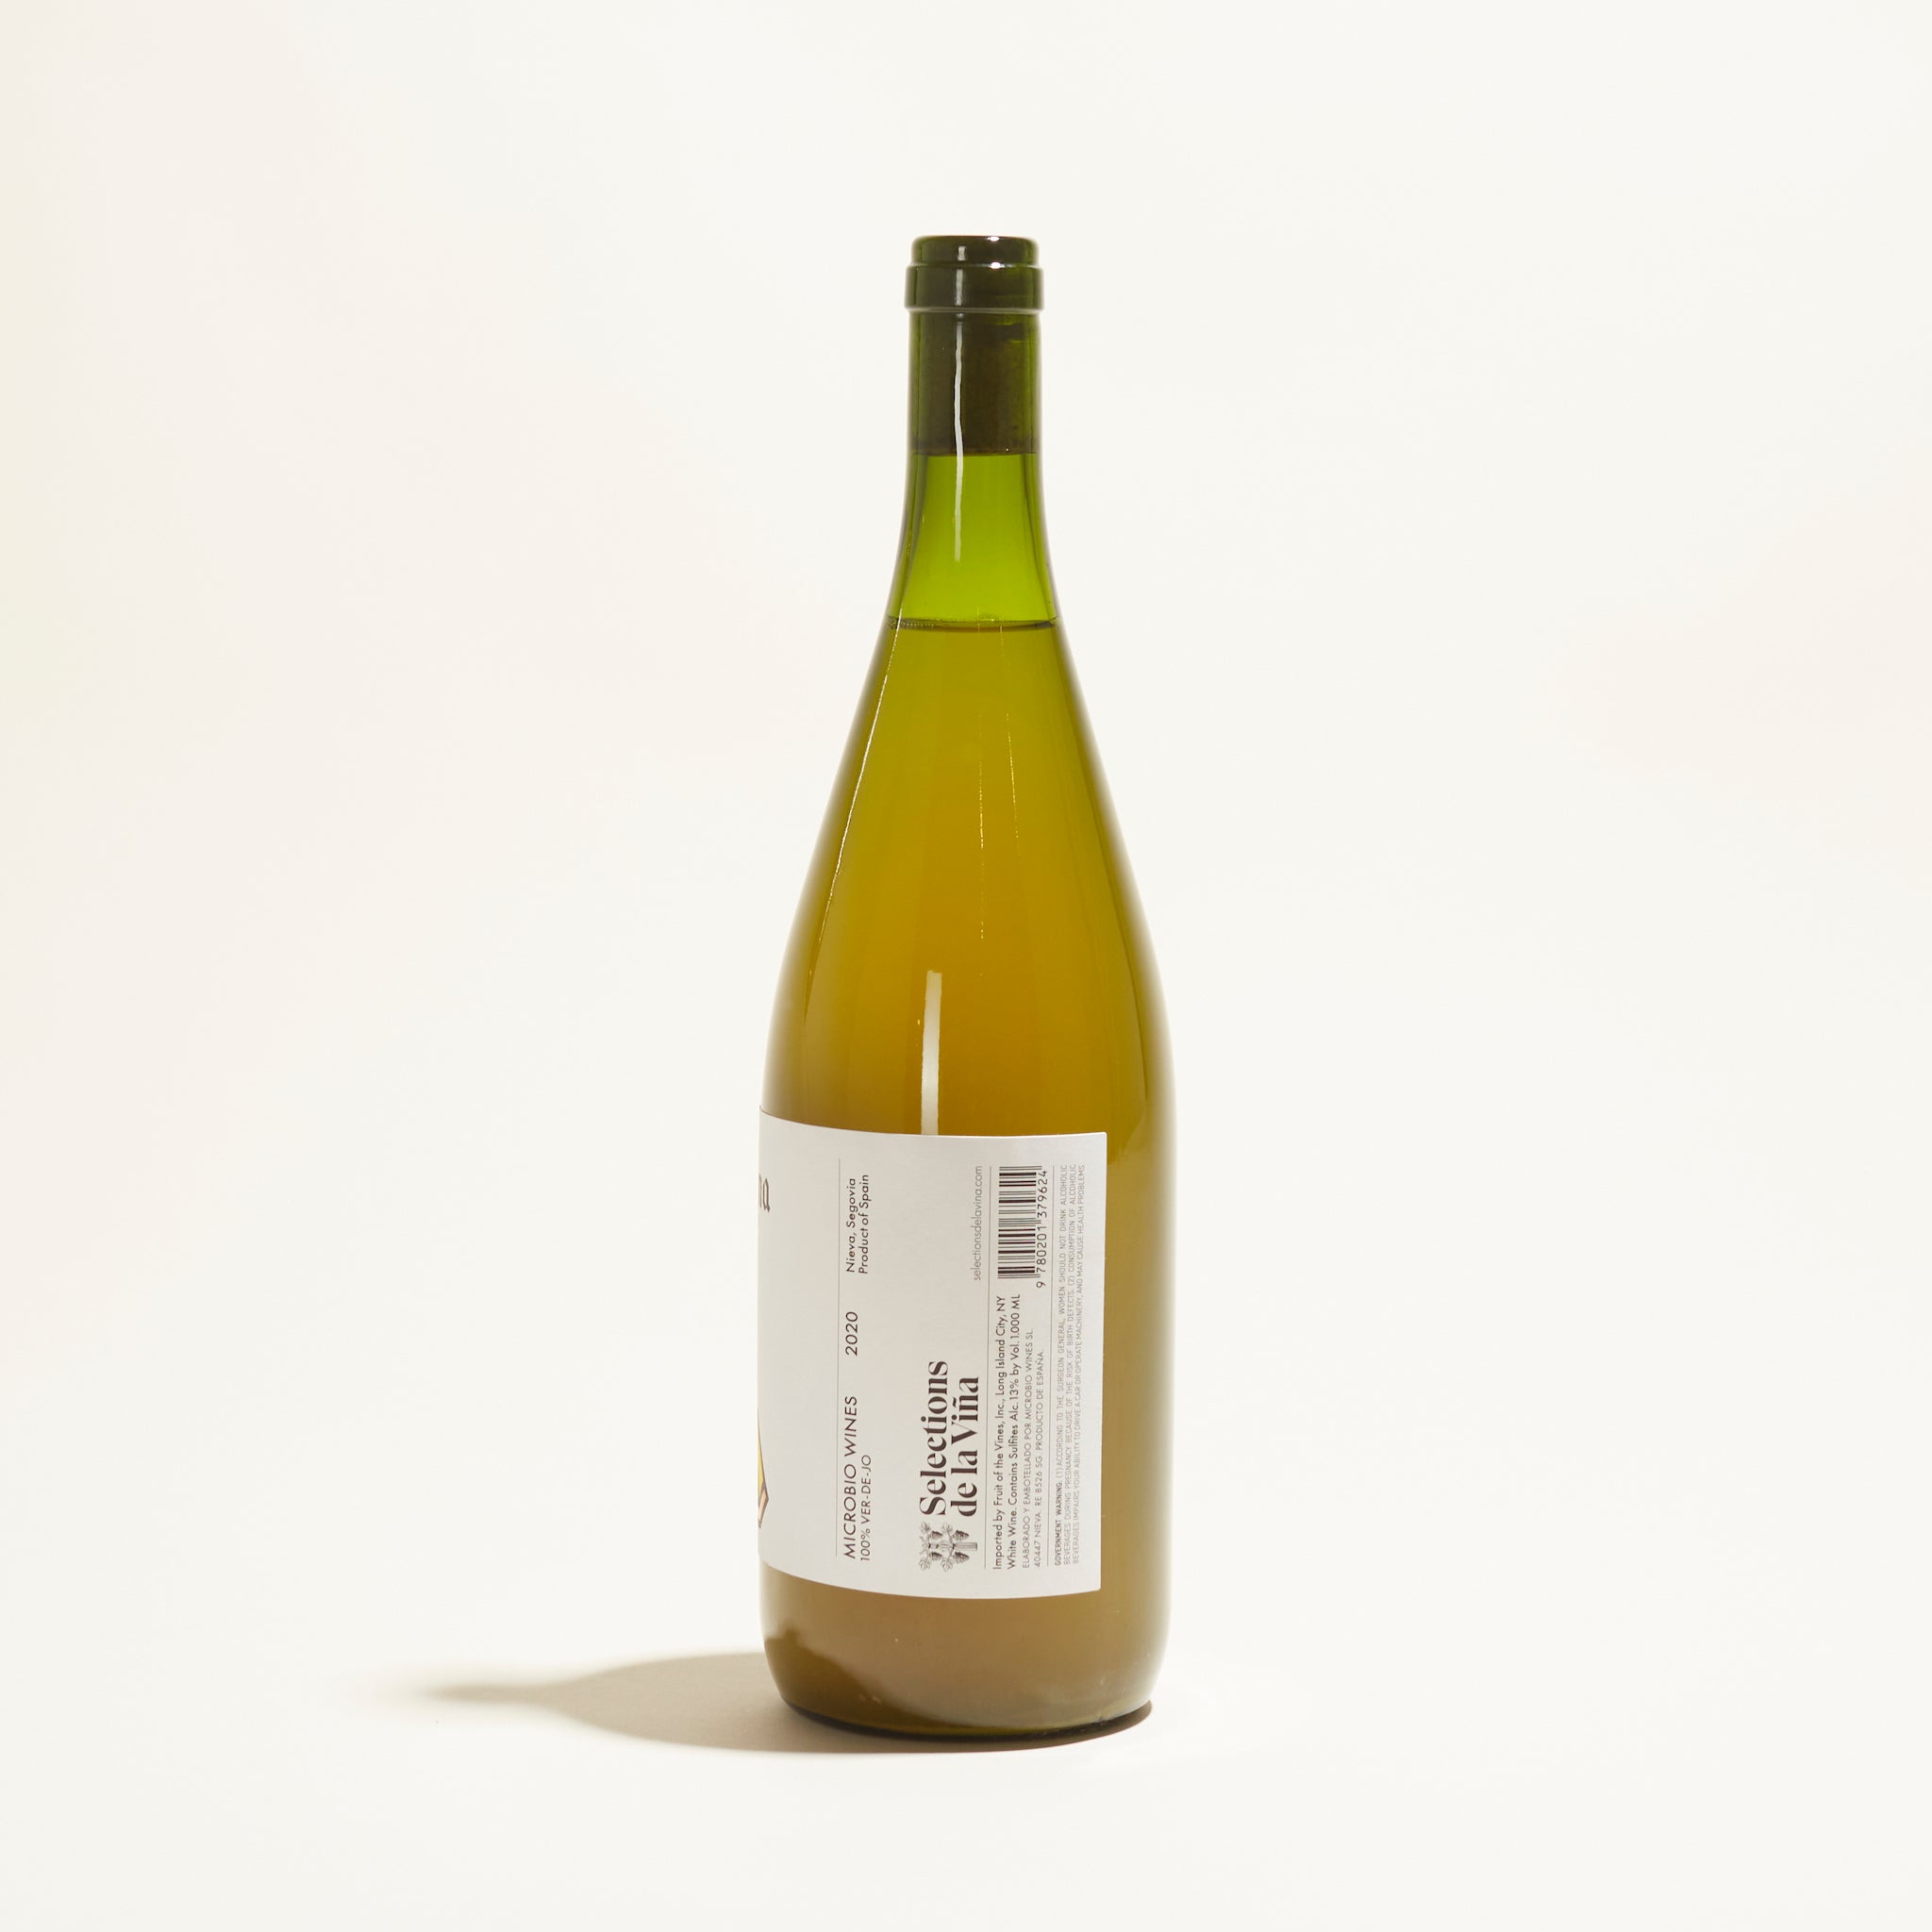 verdejo litrona natural white wine catalunya spain back